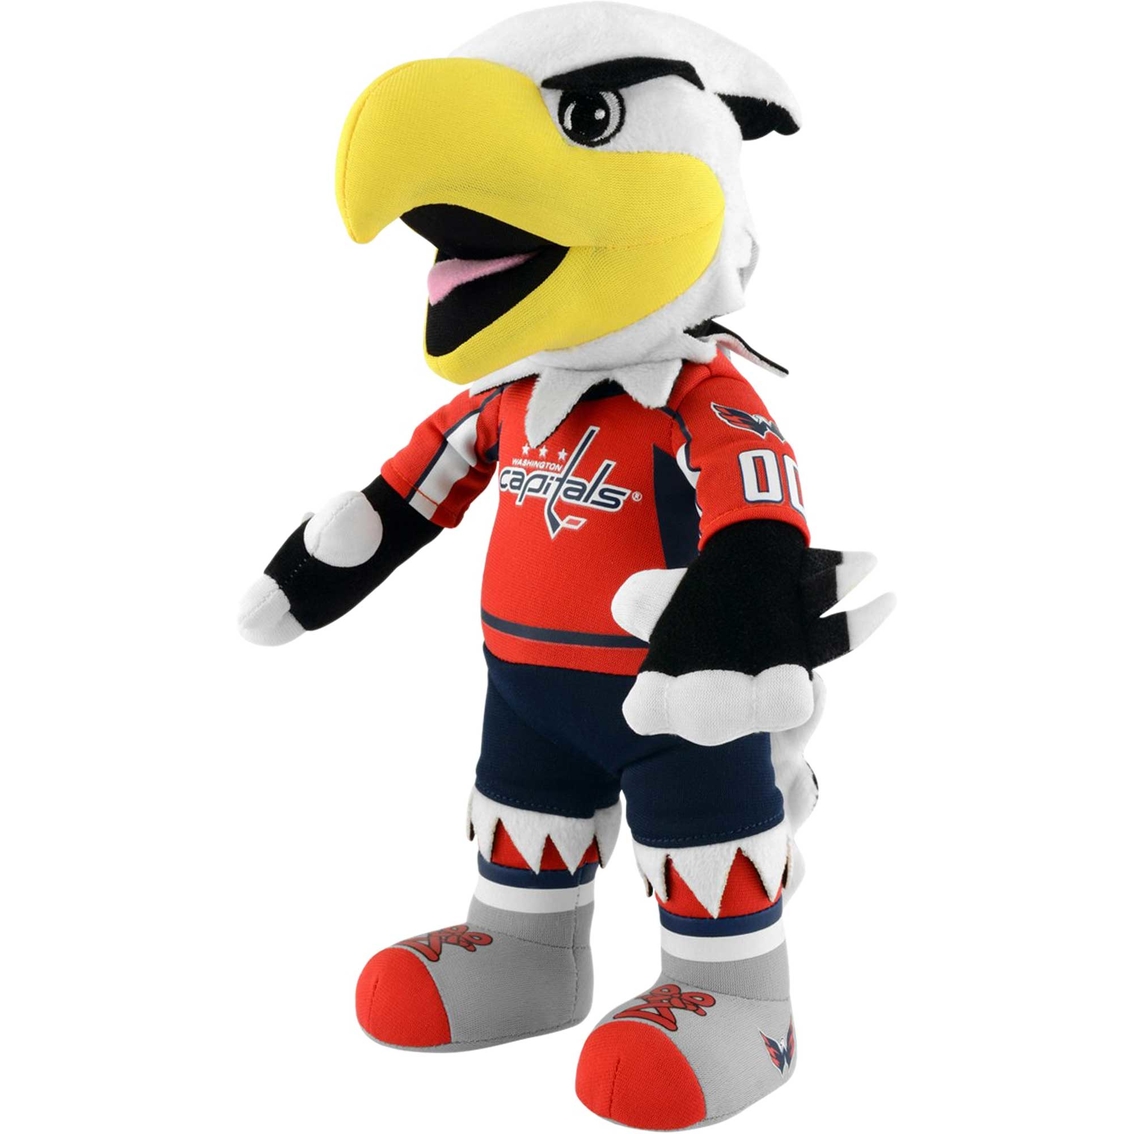 Bleacher Creatures NHL Washington Capitals Slapshot 10 in. Mascot Plush Figure - Image 3 of 6